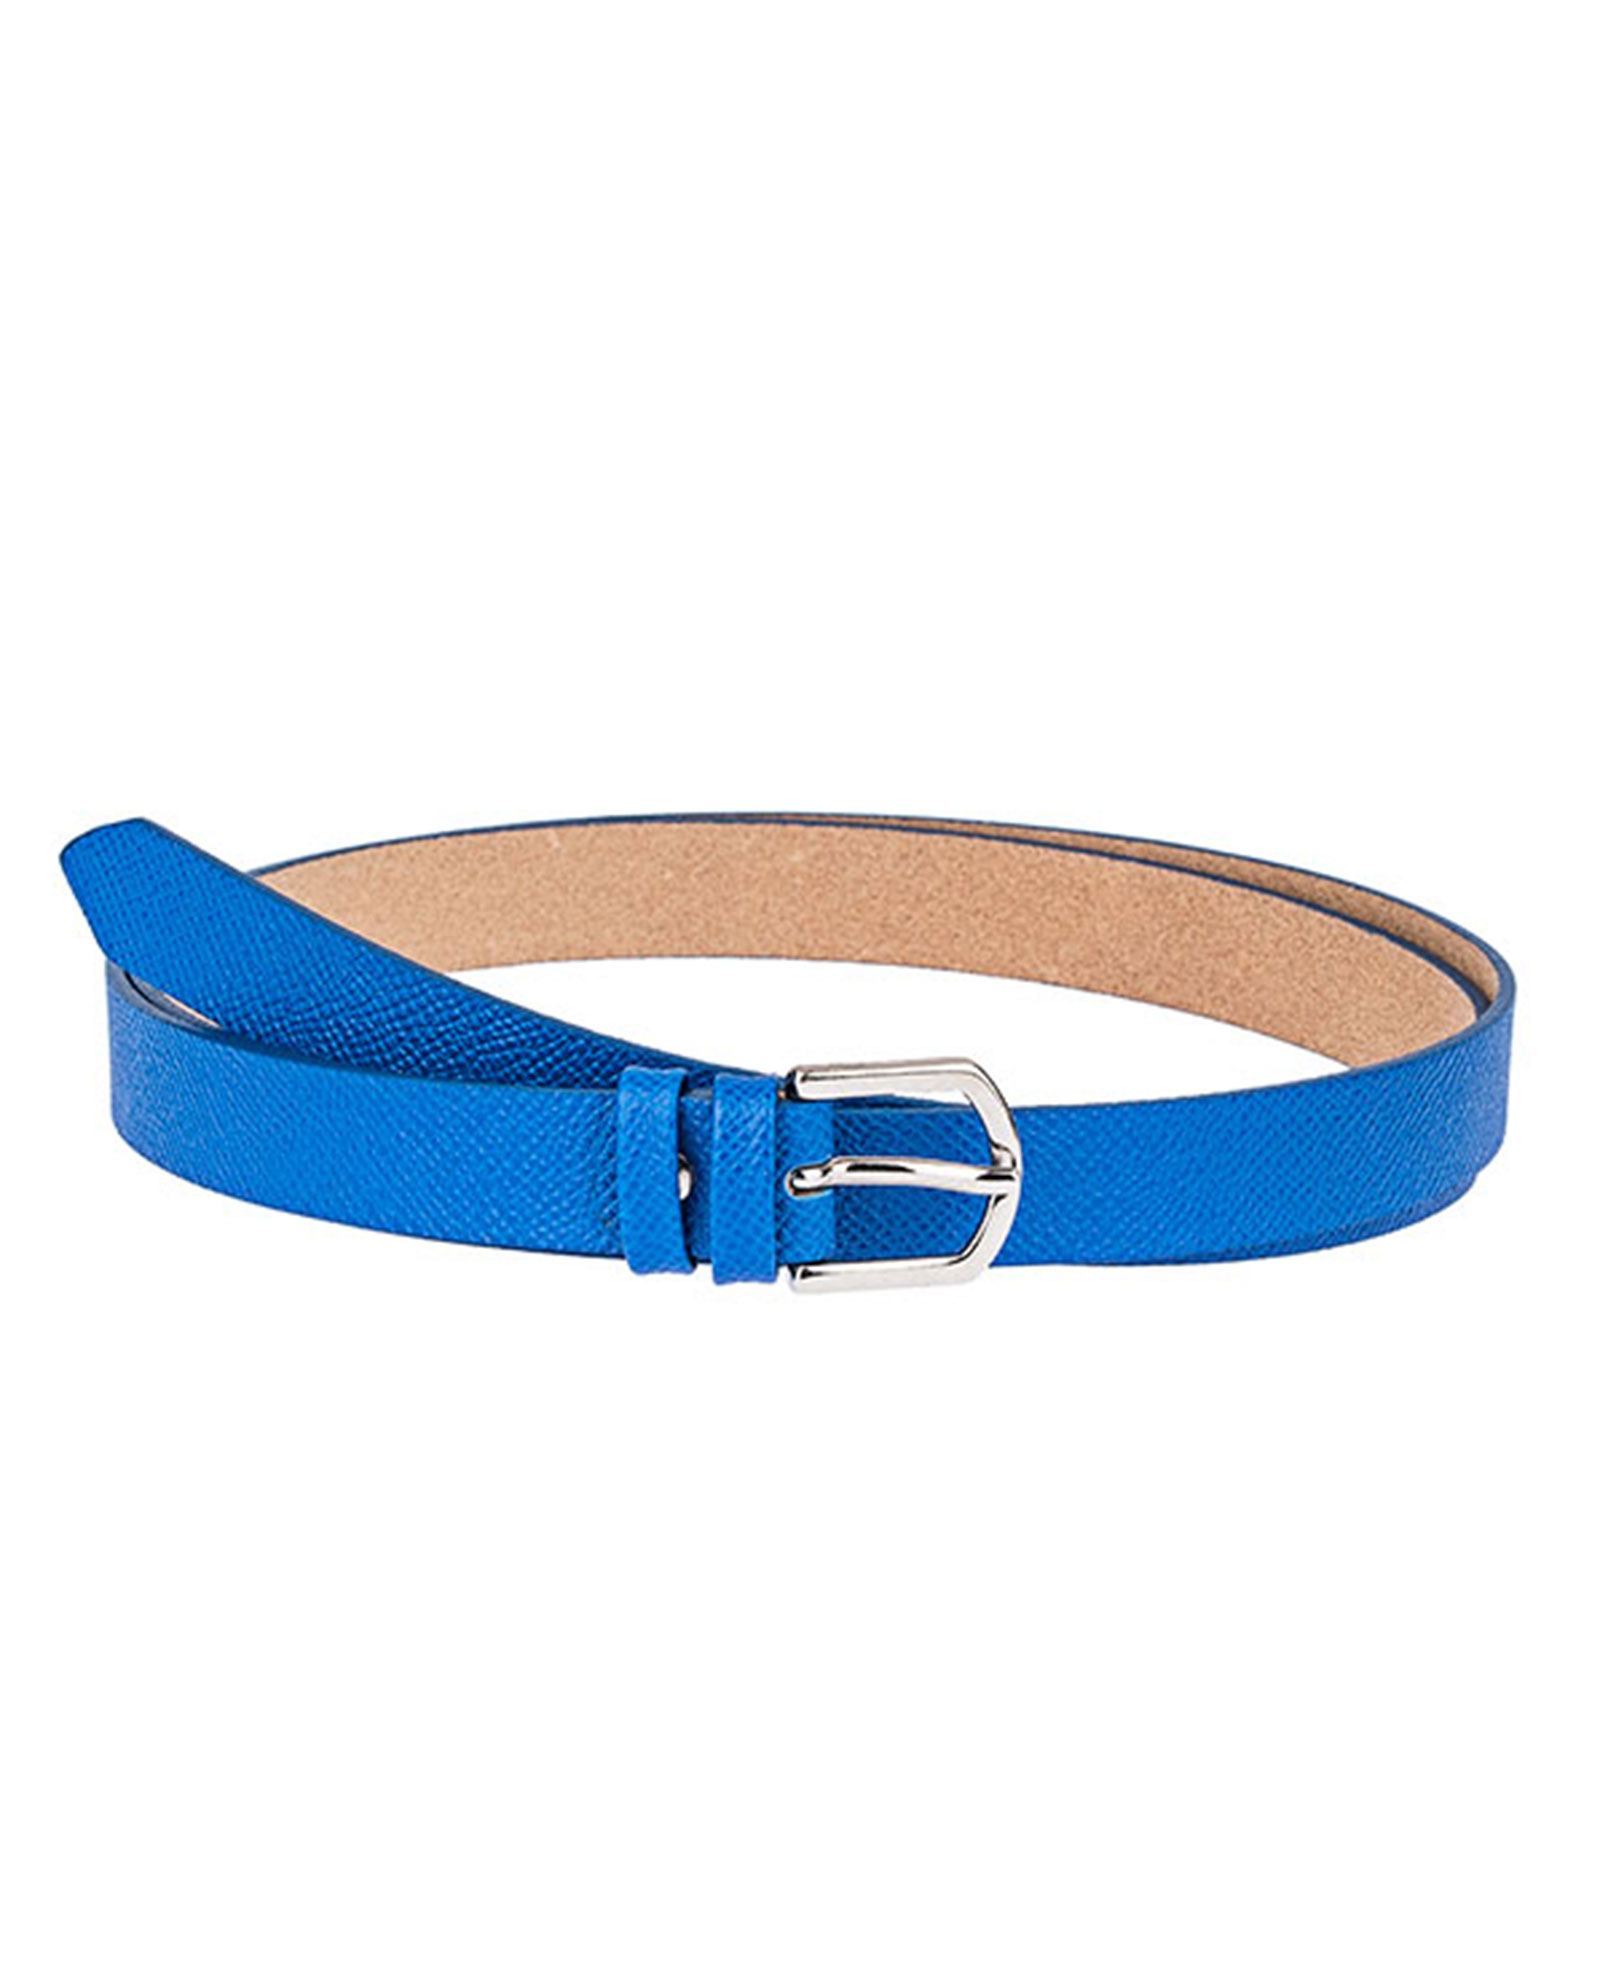 Buy Blue Women's Belt - Saffiano Leather - Free Shipping